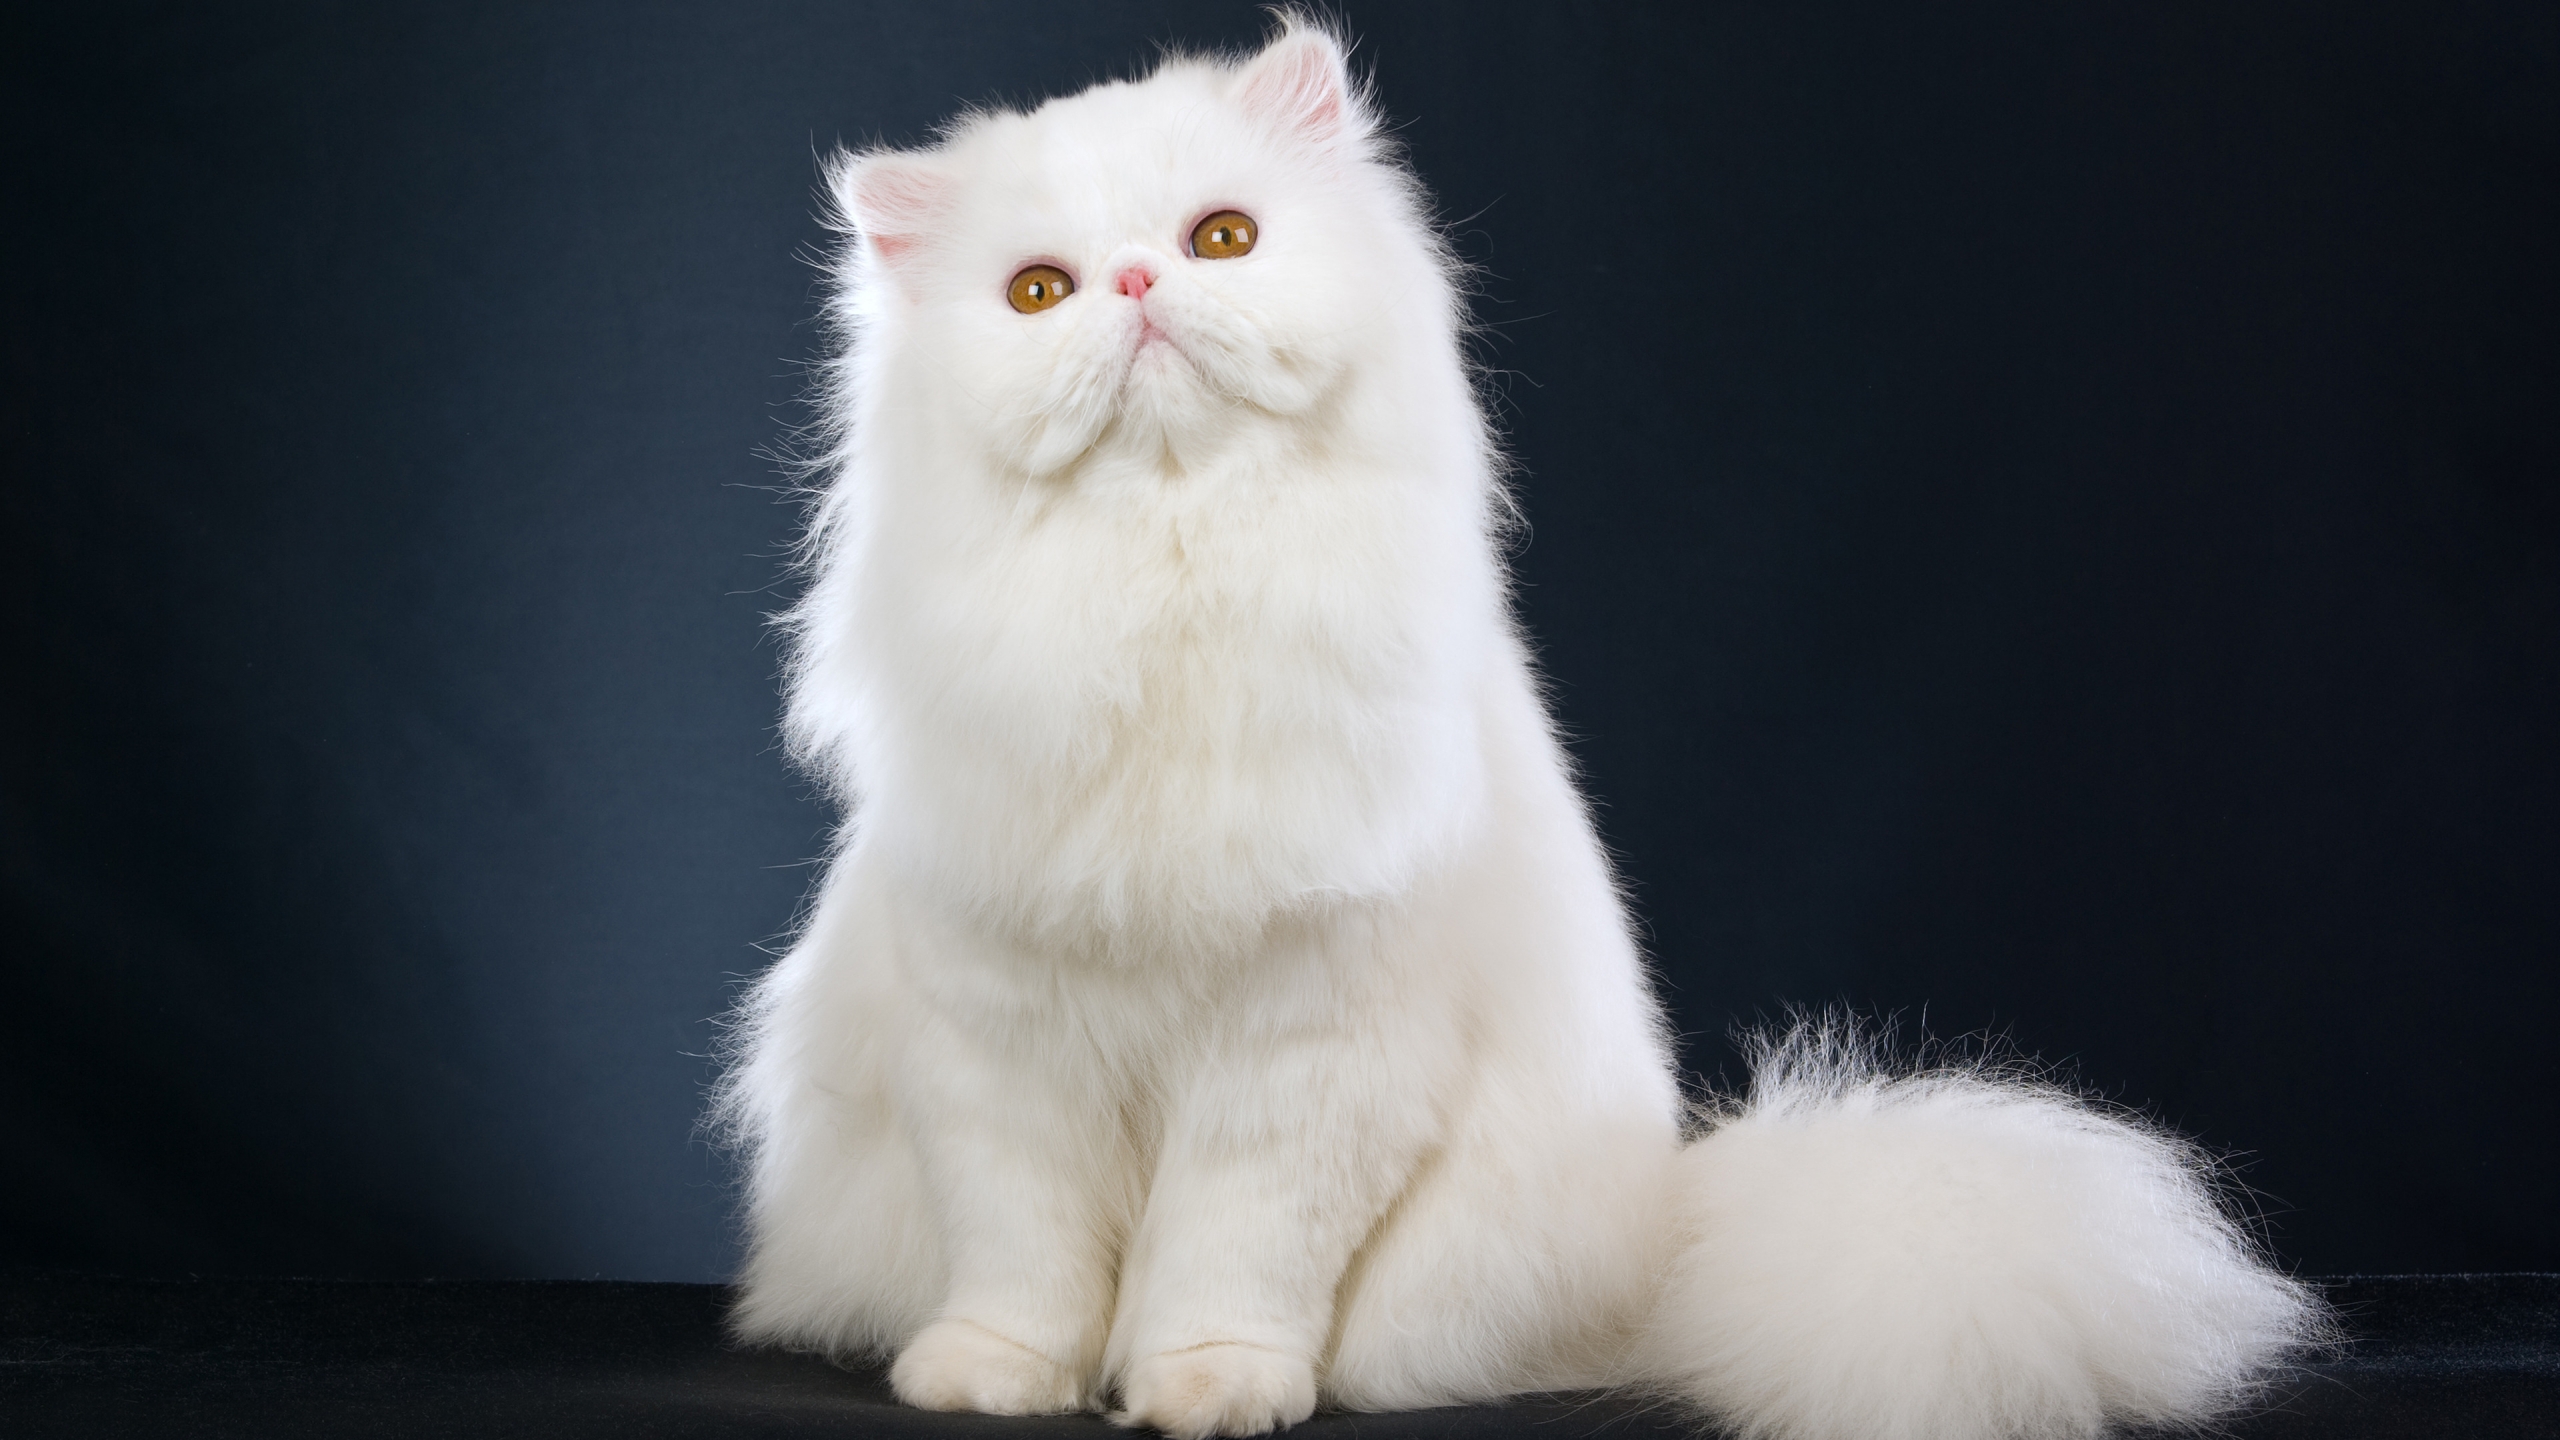 Cute White Cat for 2560x1440 HDTV resolution